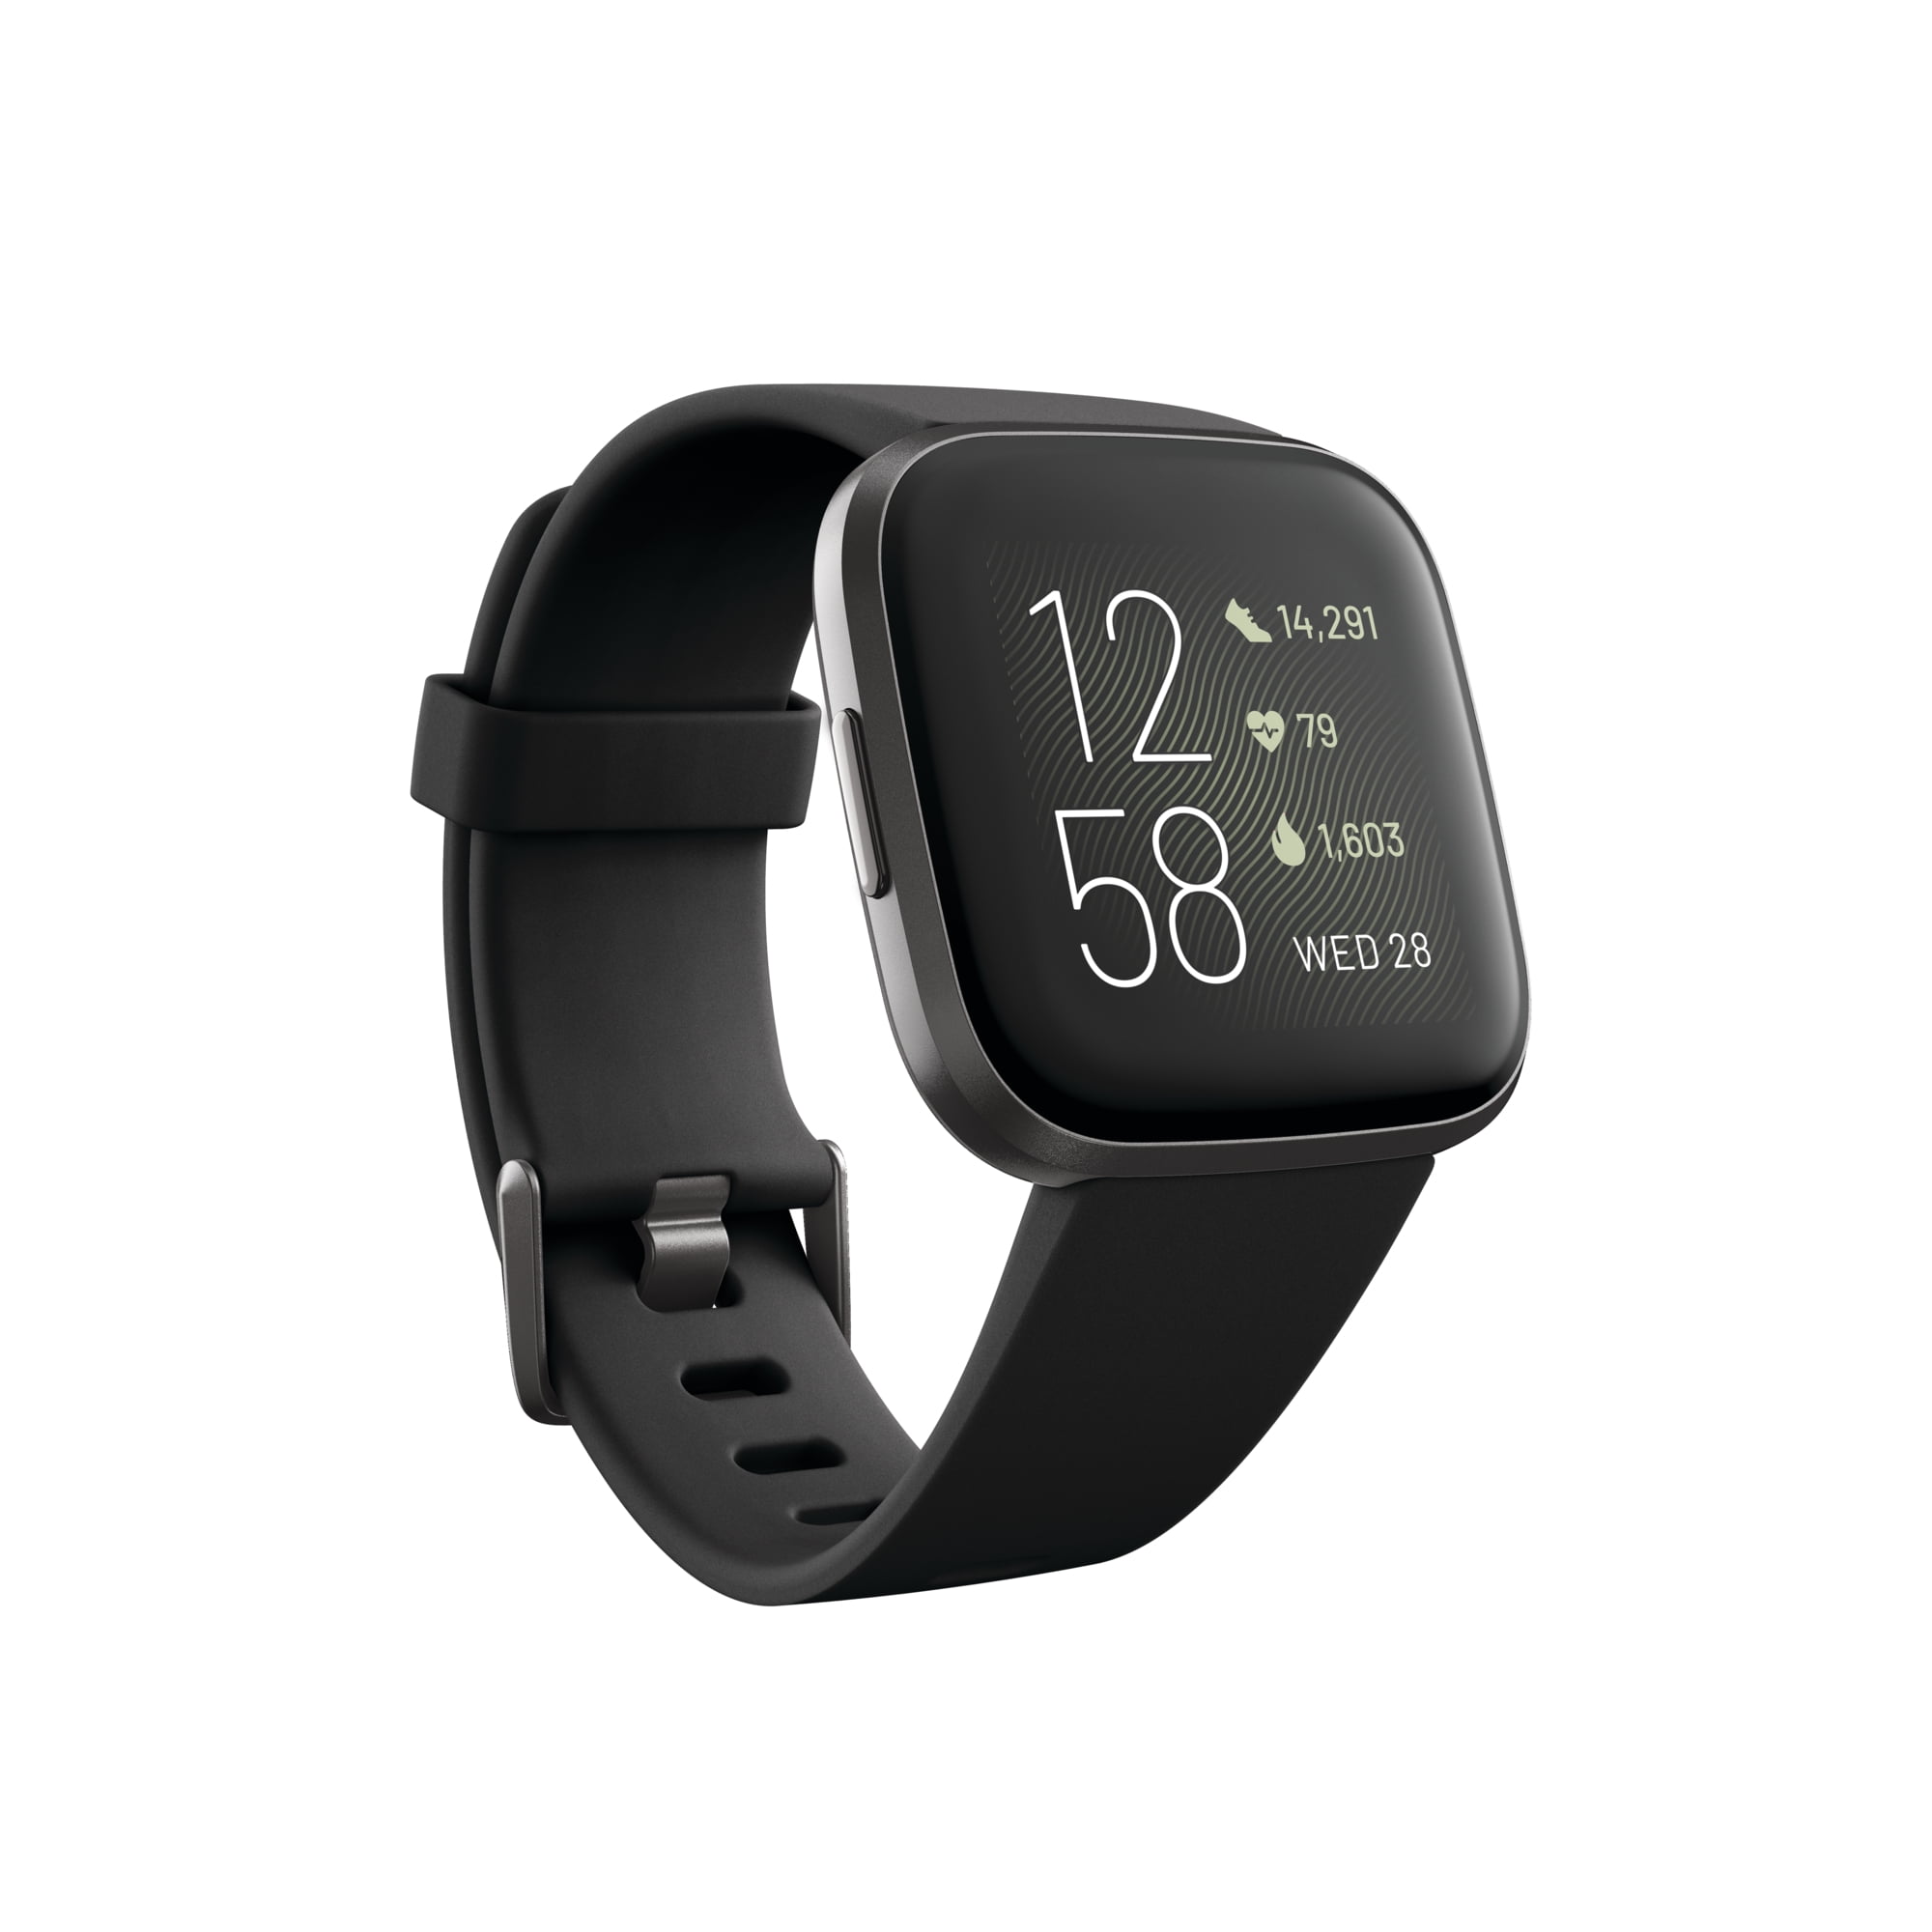 FB507BKBK Fitbit Versa 2 Health & Fitness Smartwatch for sale online 